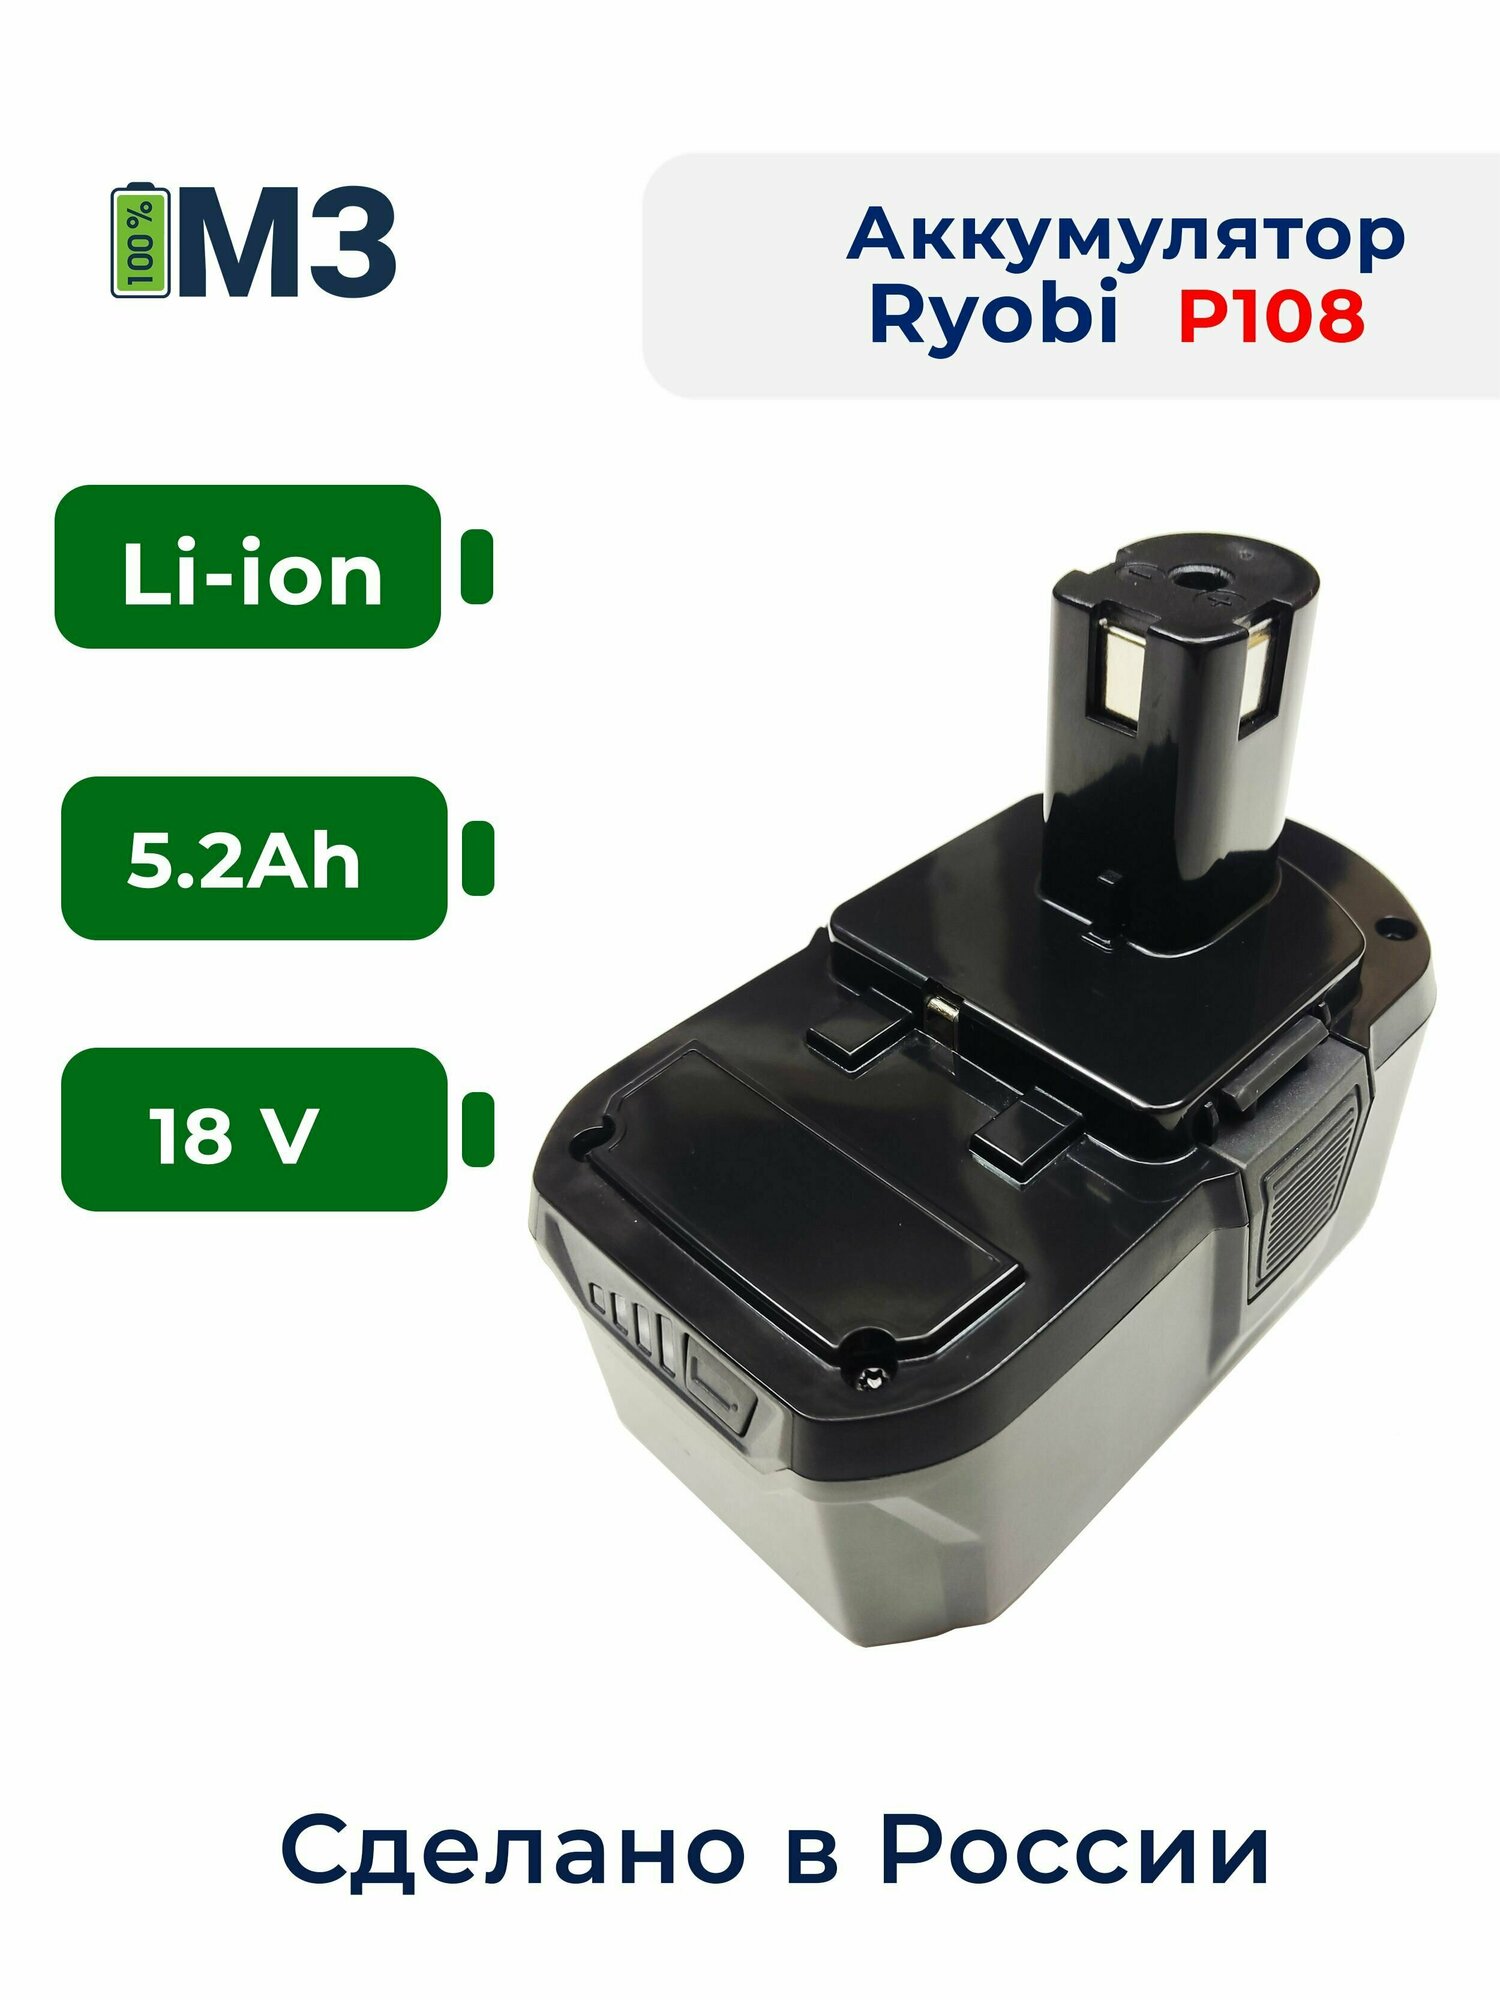 Аккумулятор для шуруповерта RYOBI P108 18V, 5.2Ah Li-ion